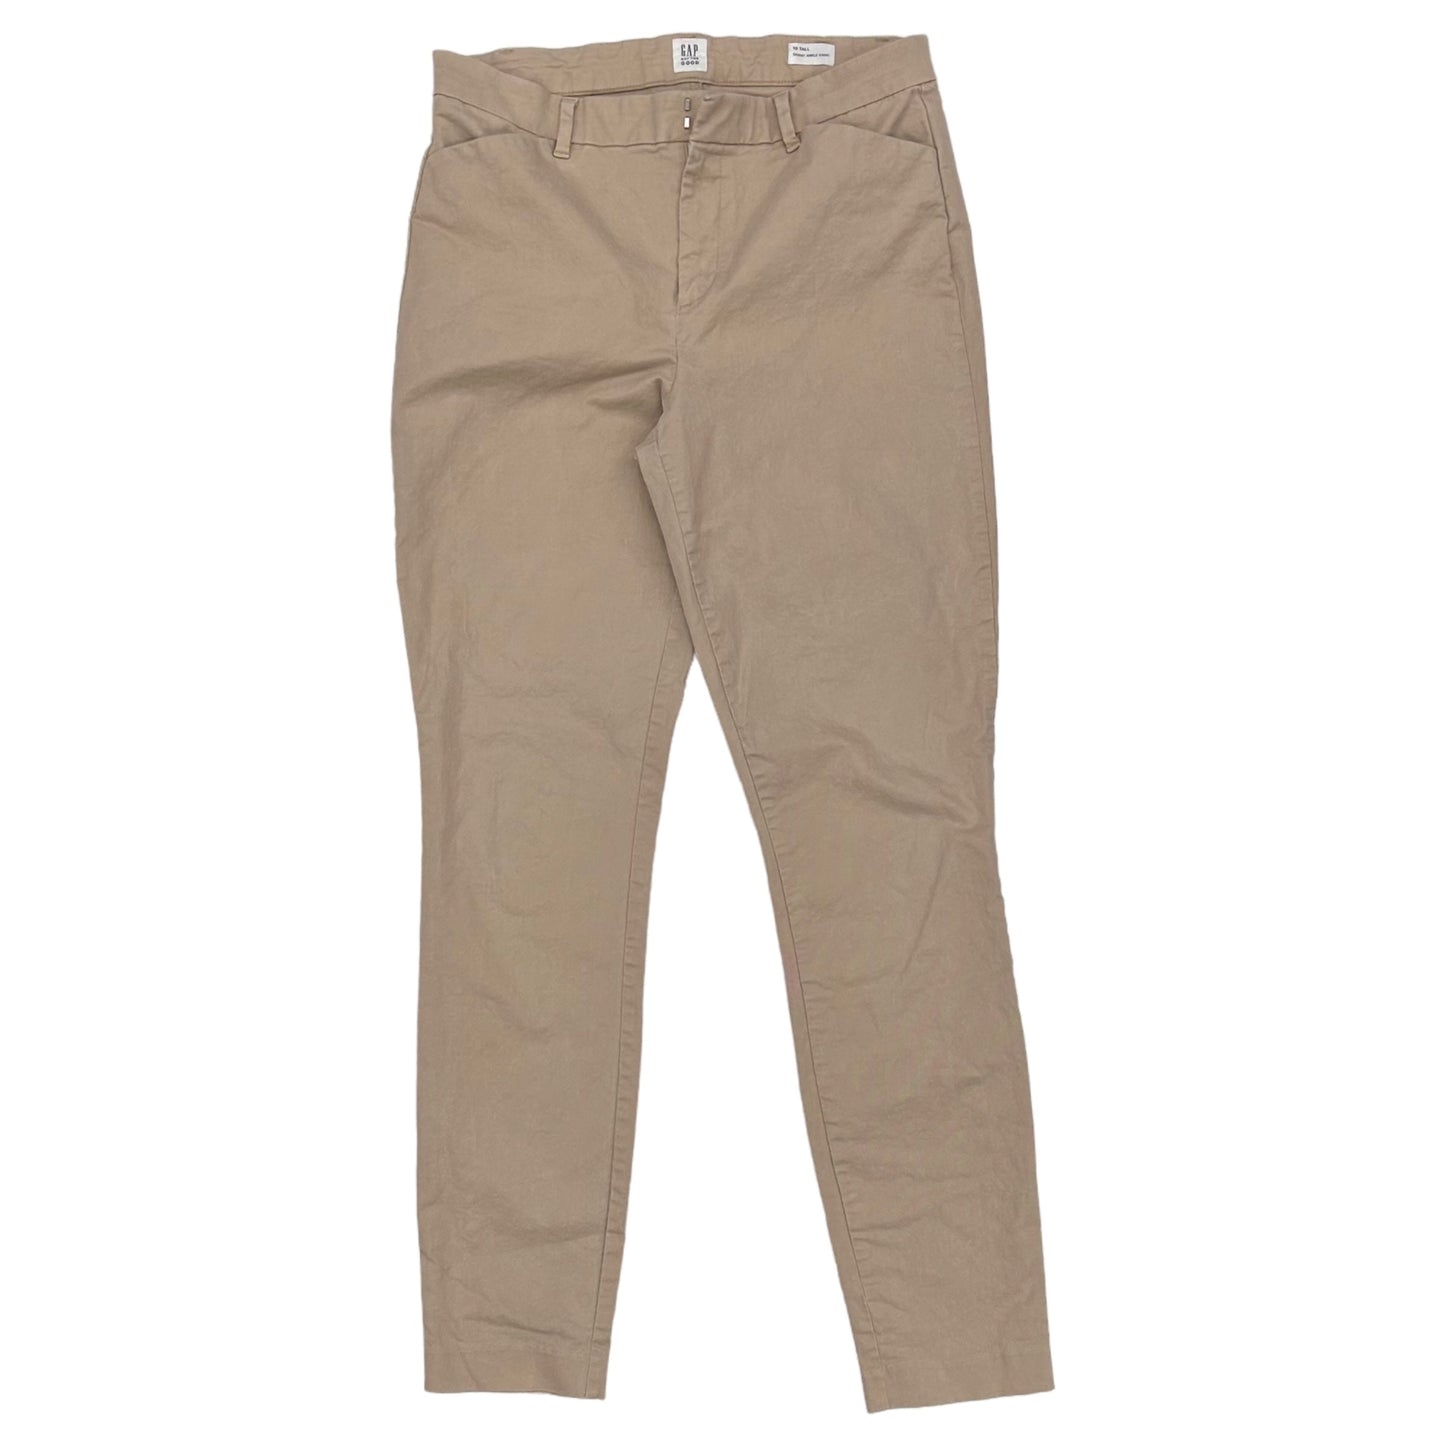 Pants Chinos & Khakis By Gap  Size: 10tall